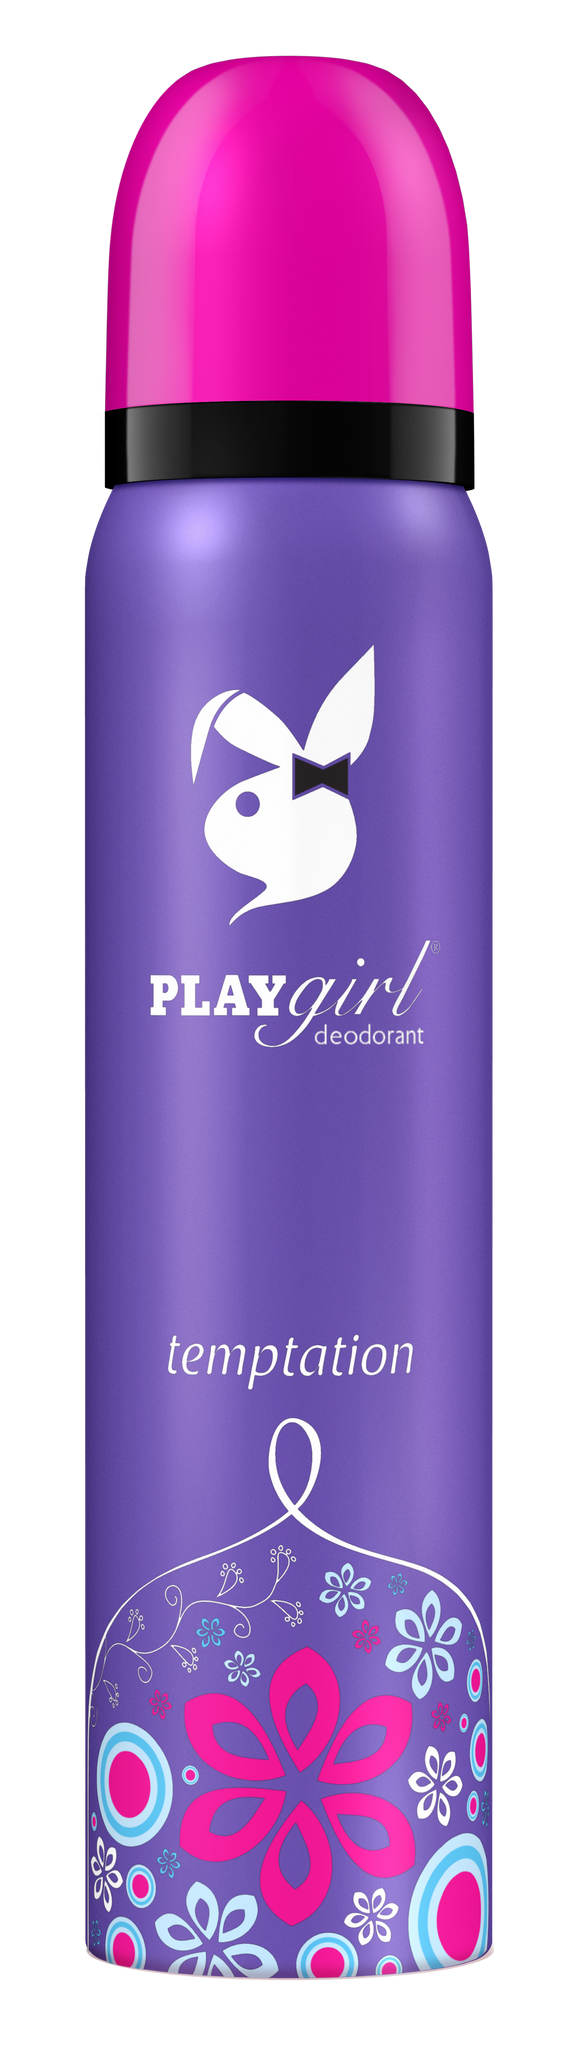 Play Girl Temptation - Deodorant - 90ml